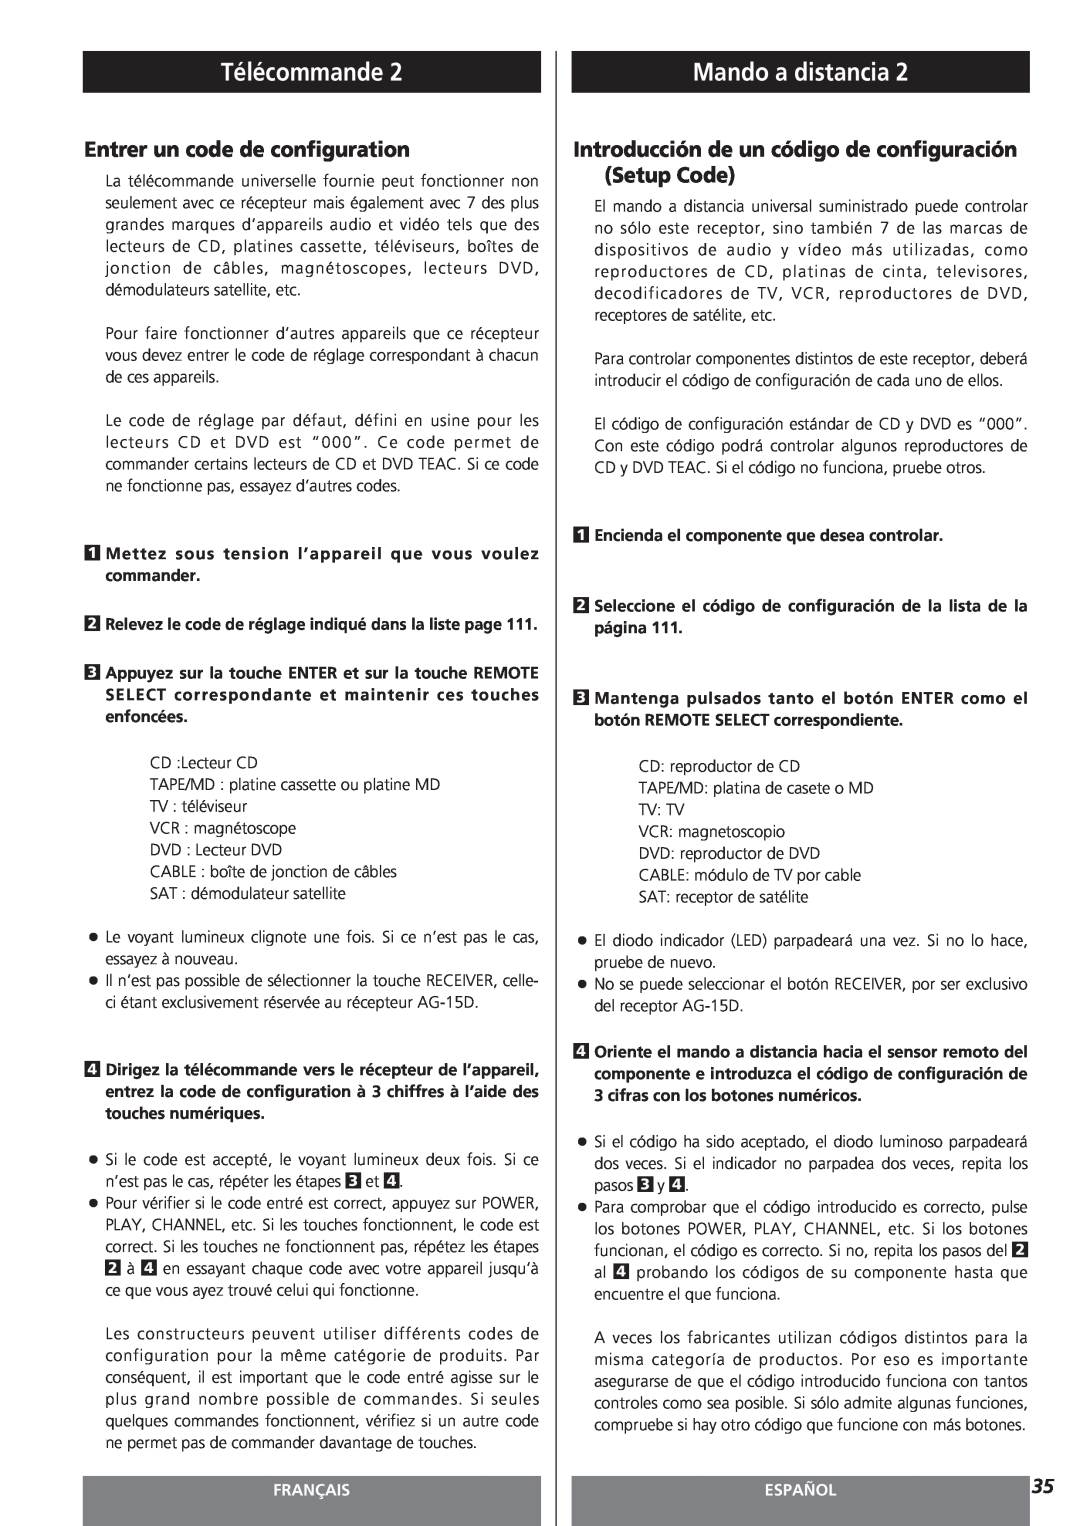 Teac AG-15D owner manual Entrer un code de configuration, Télécommande, Mando a distancia, Français, Español 